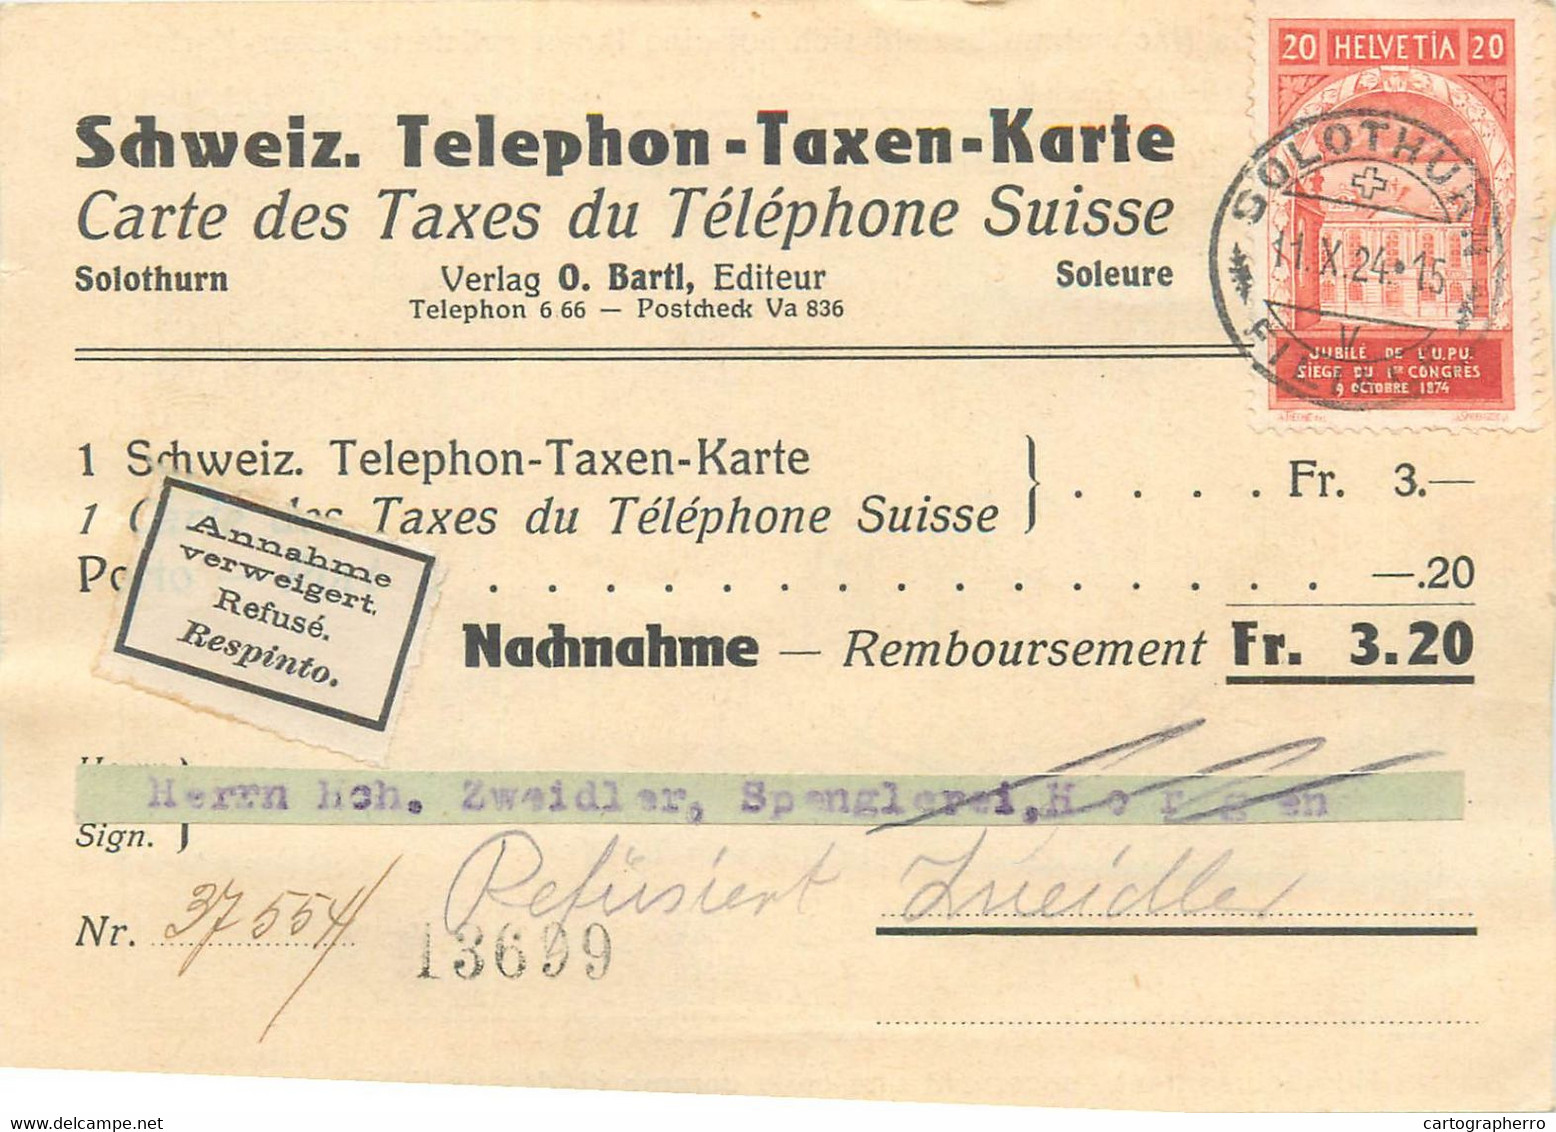 Carte Des Taxes Du Telephone Suisse 1924 Schweiz Telephon Taxen Karte Solothurn Switzerland Map - Telégrafo